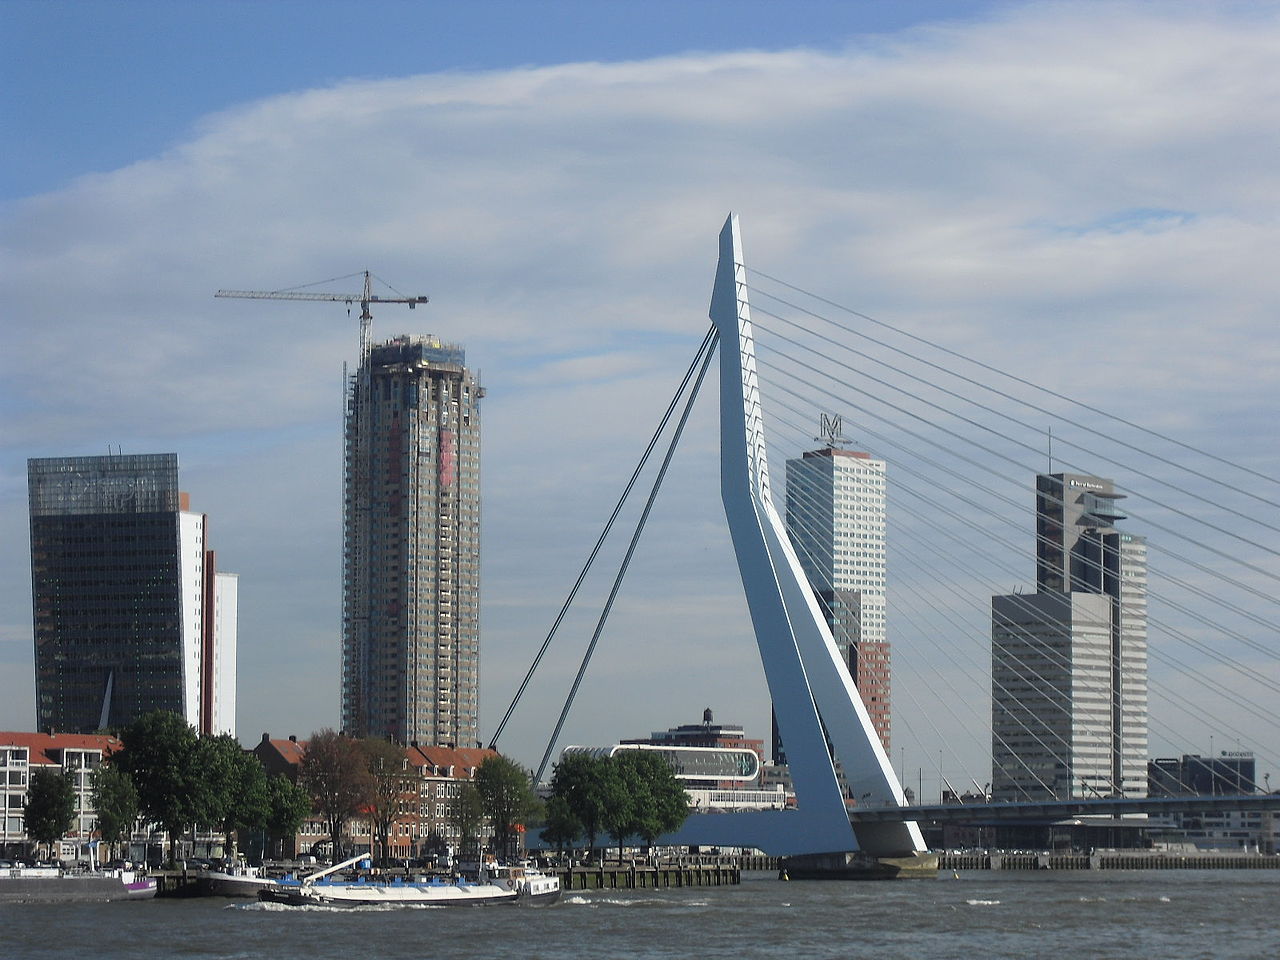 Erasmus Bridge in Rotterdam